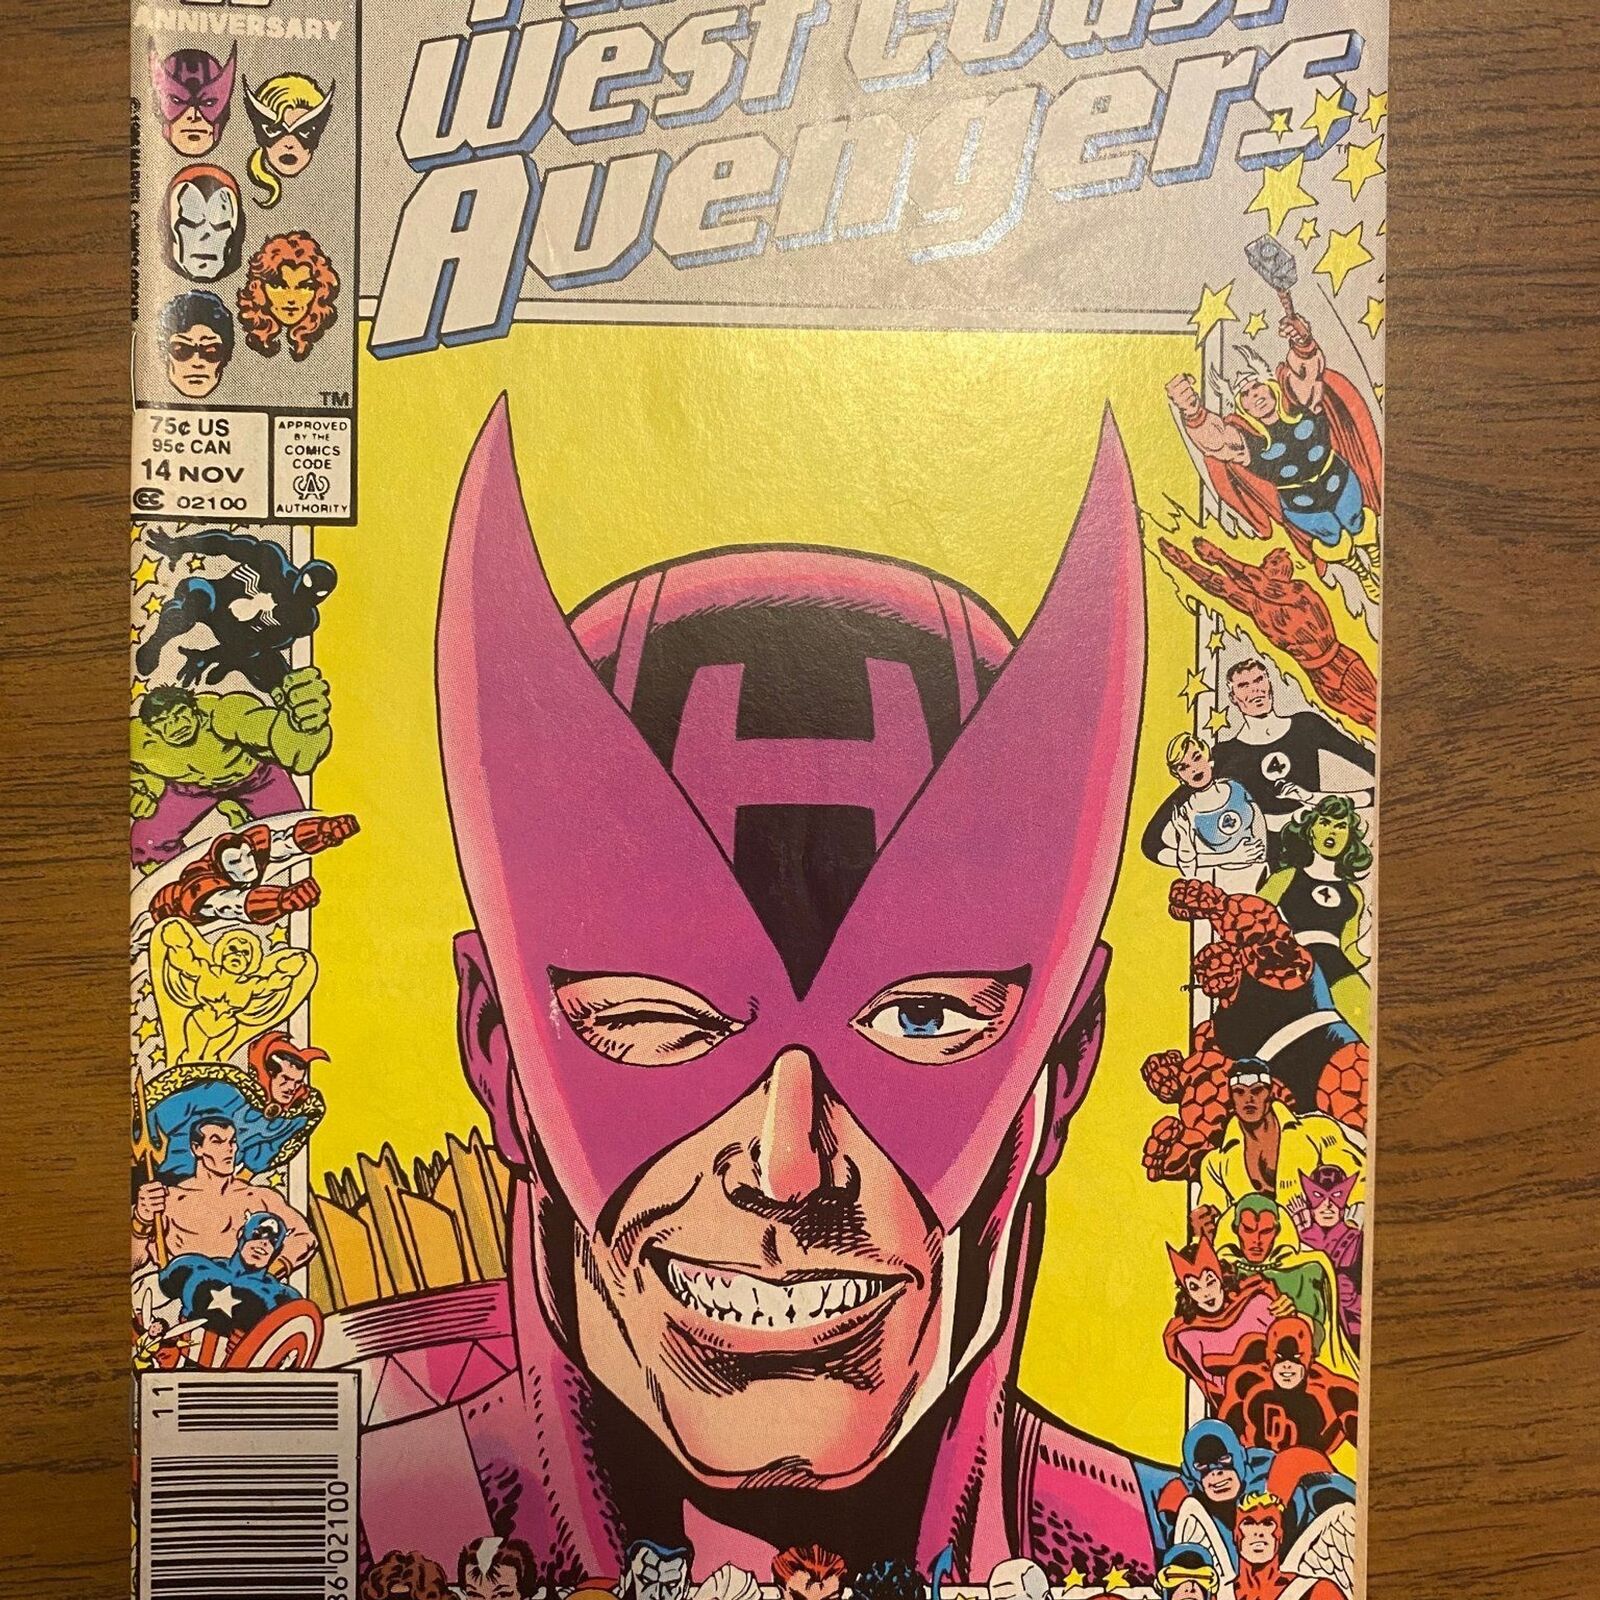 Marvel Comics West Coast Avengers #14 (November 1986)